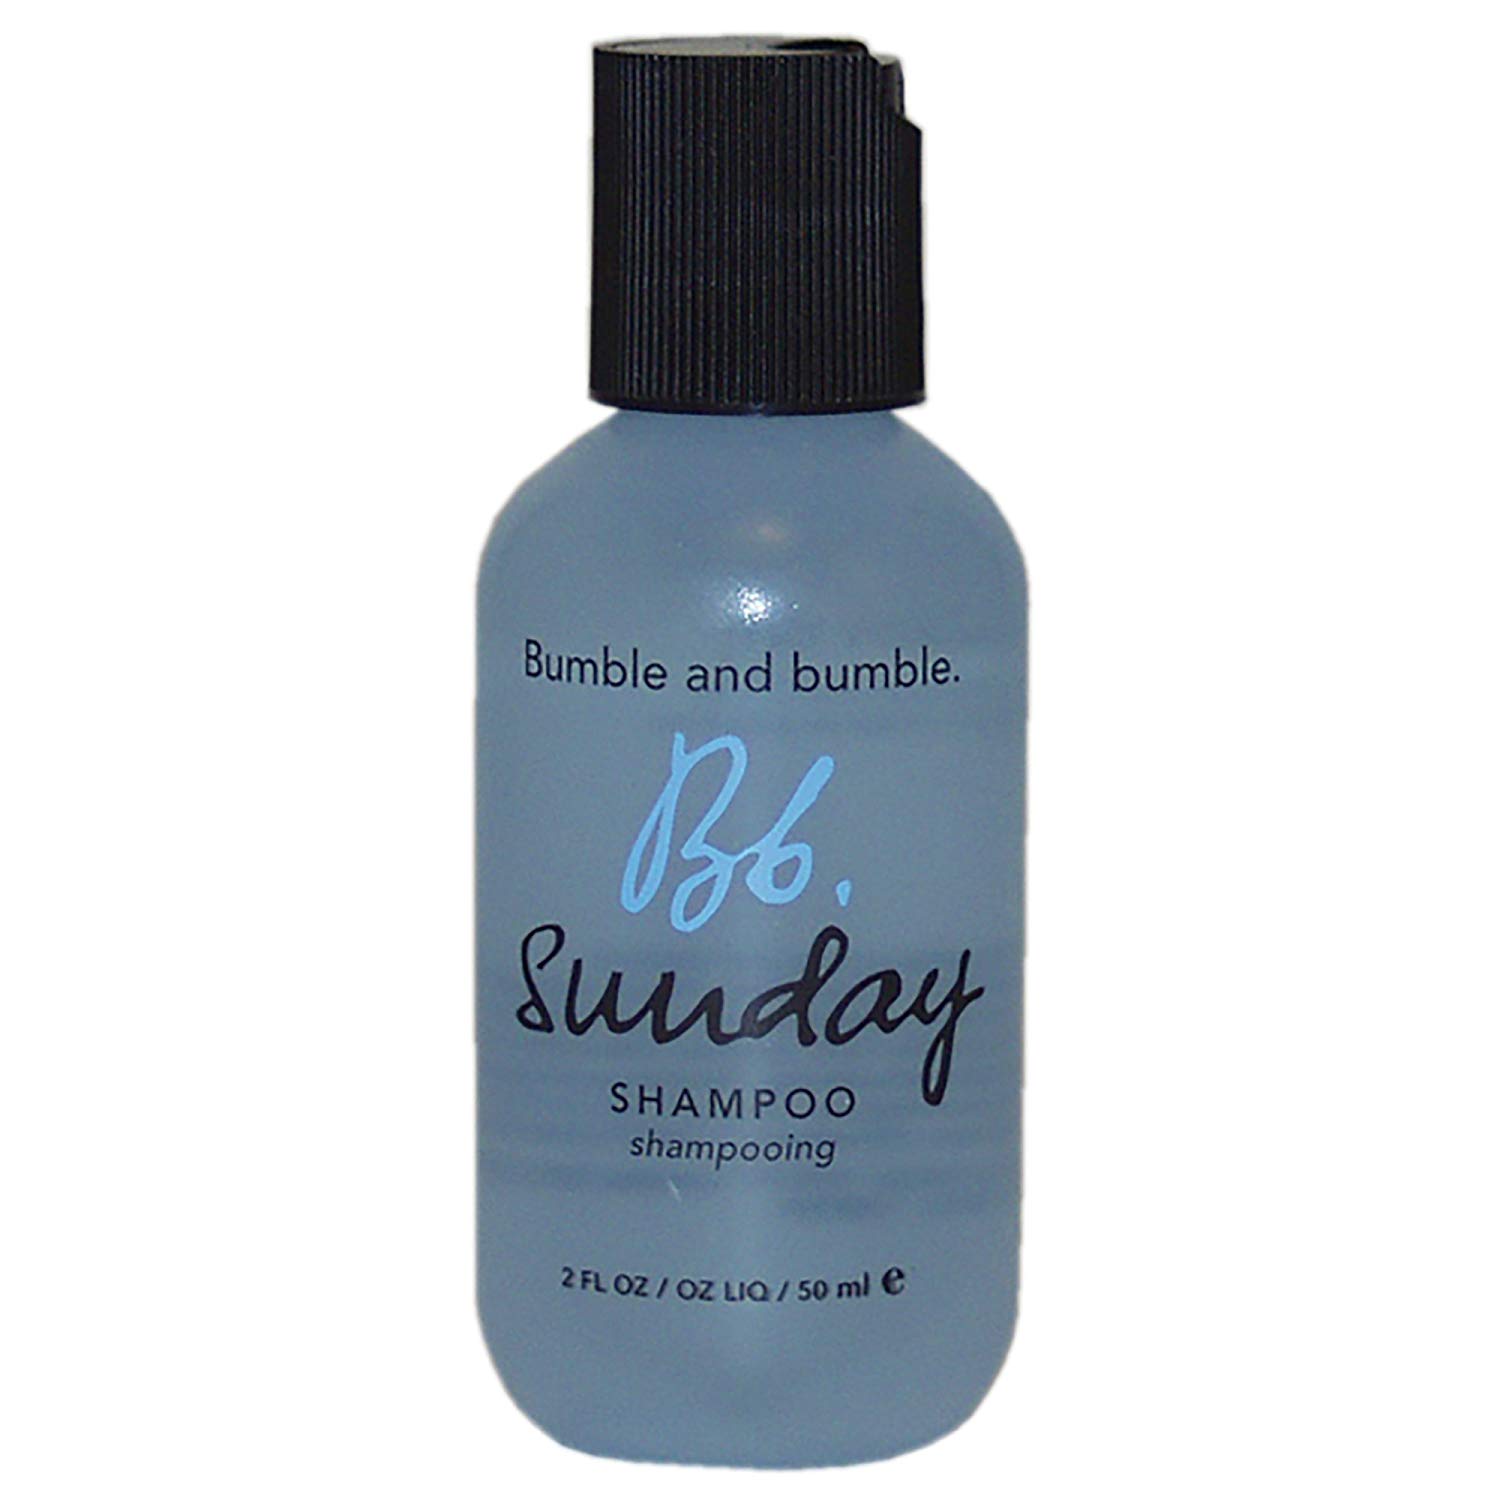 Bumble and Bumble Sunday Oily Hair Shampoo Reviews